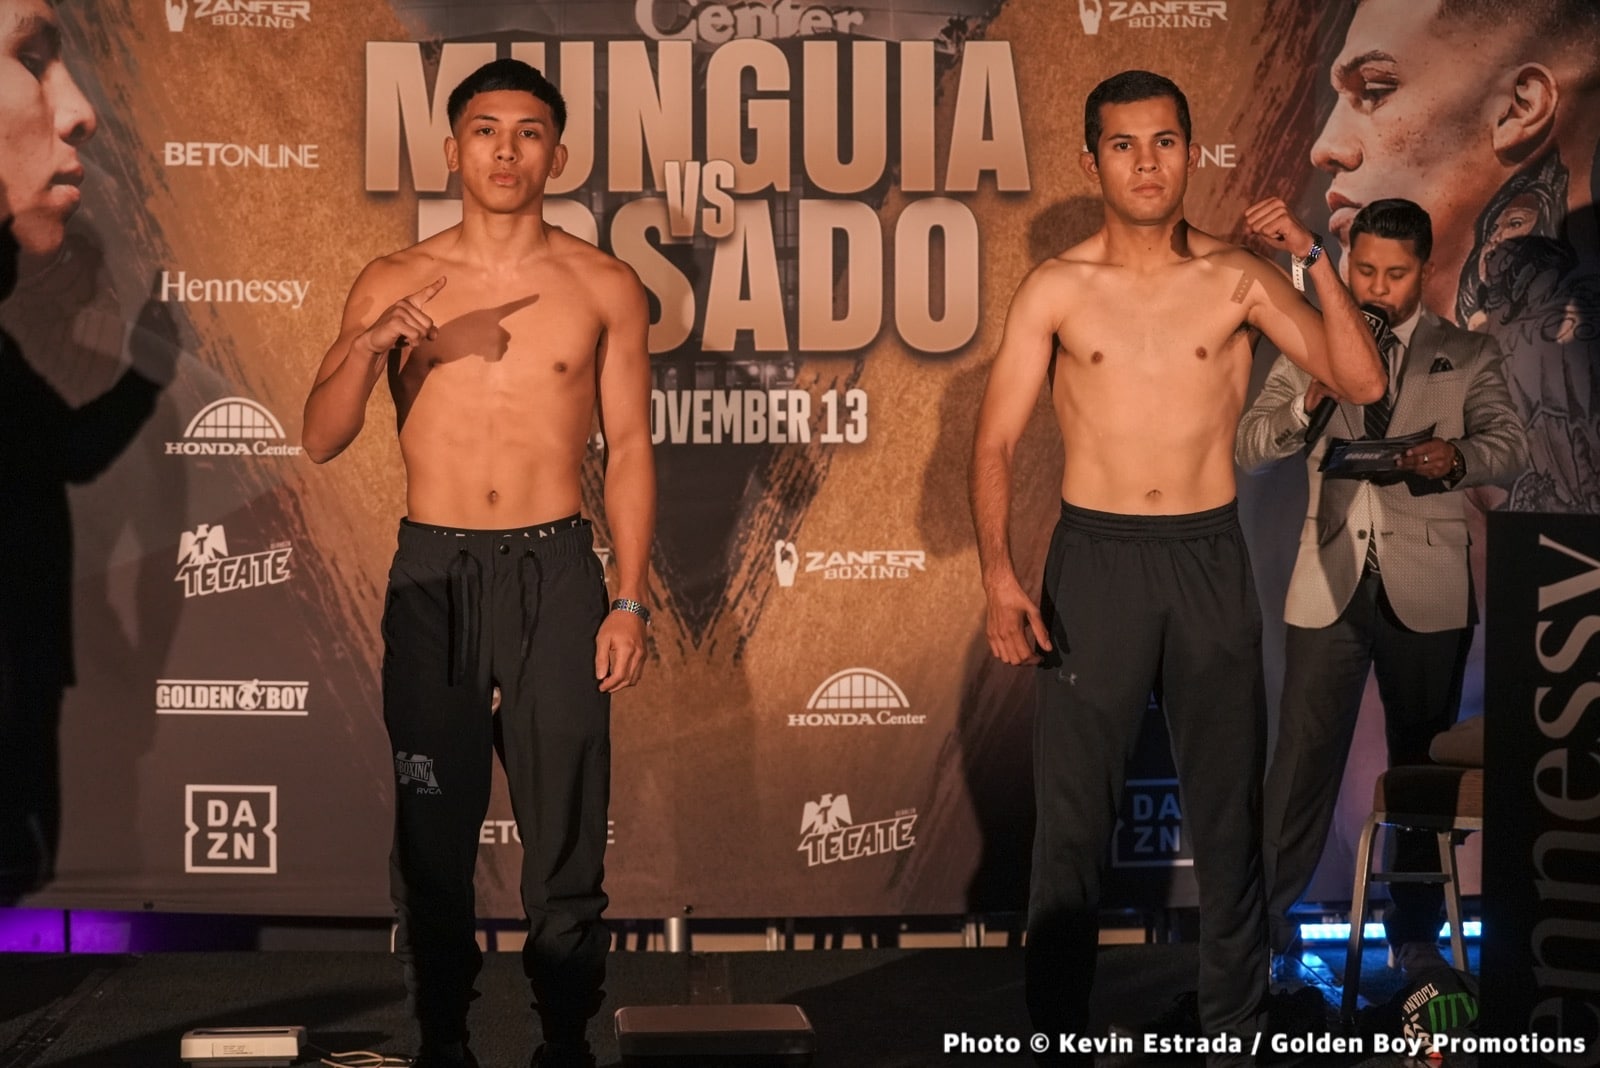 Jaime Munguia vs. Gabriel Rosado - weights